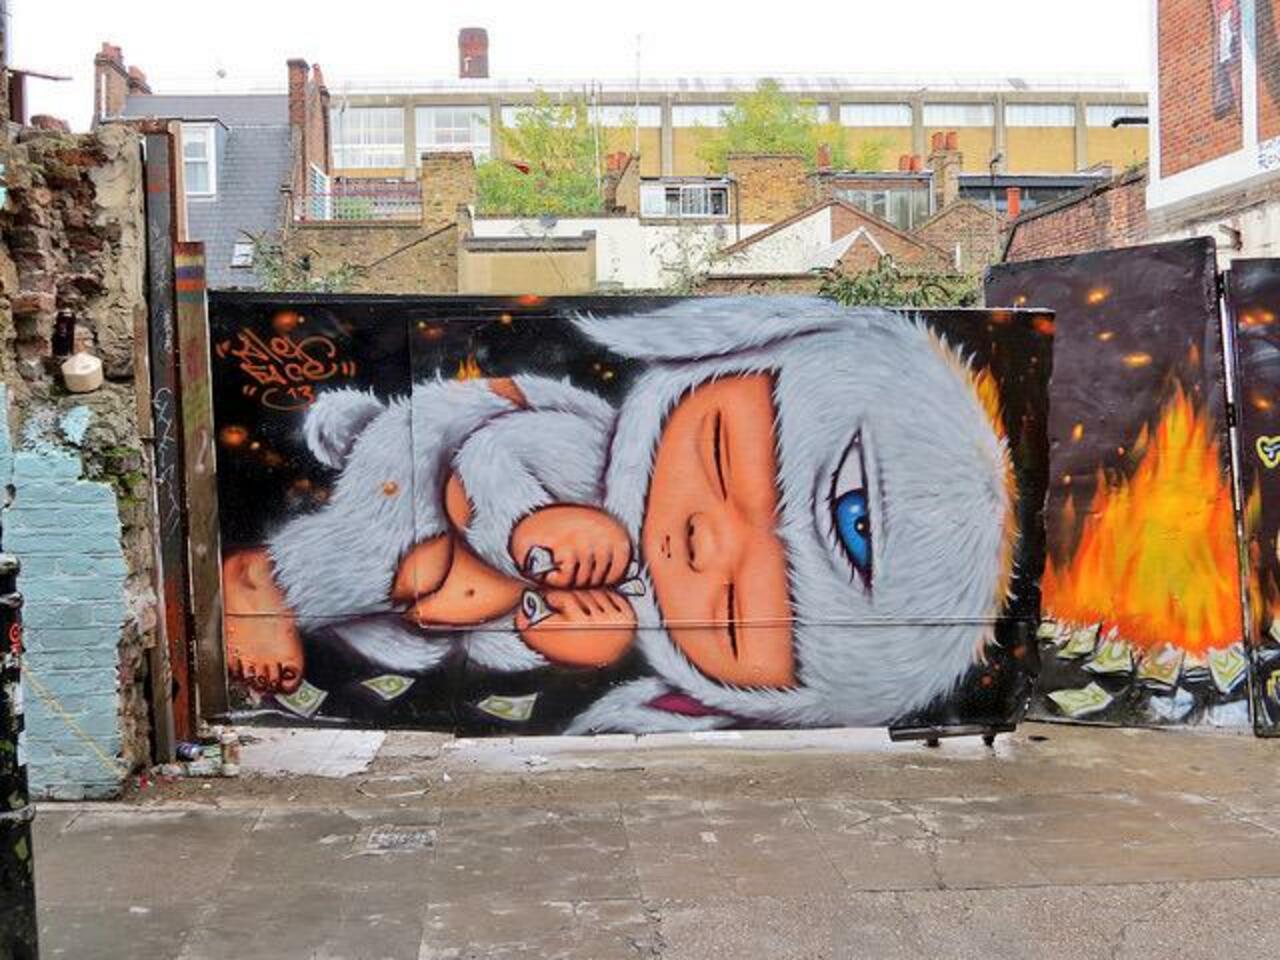 I'm a #WABBIT.. #conejo #tochtli #kaninchen  RT @Pitchuskita: Alex Face
London #streetart #art #graffiti #mural http://t.co/TOK3NG6aYI